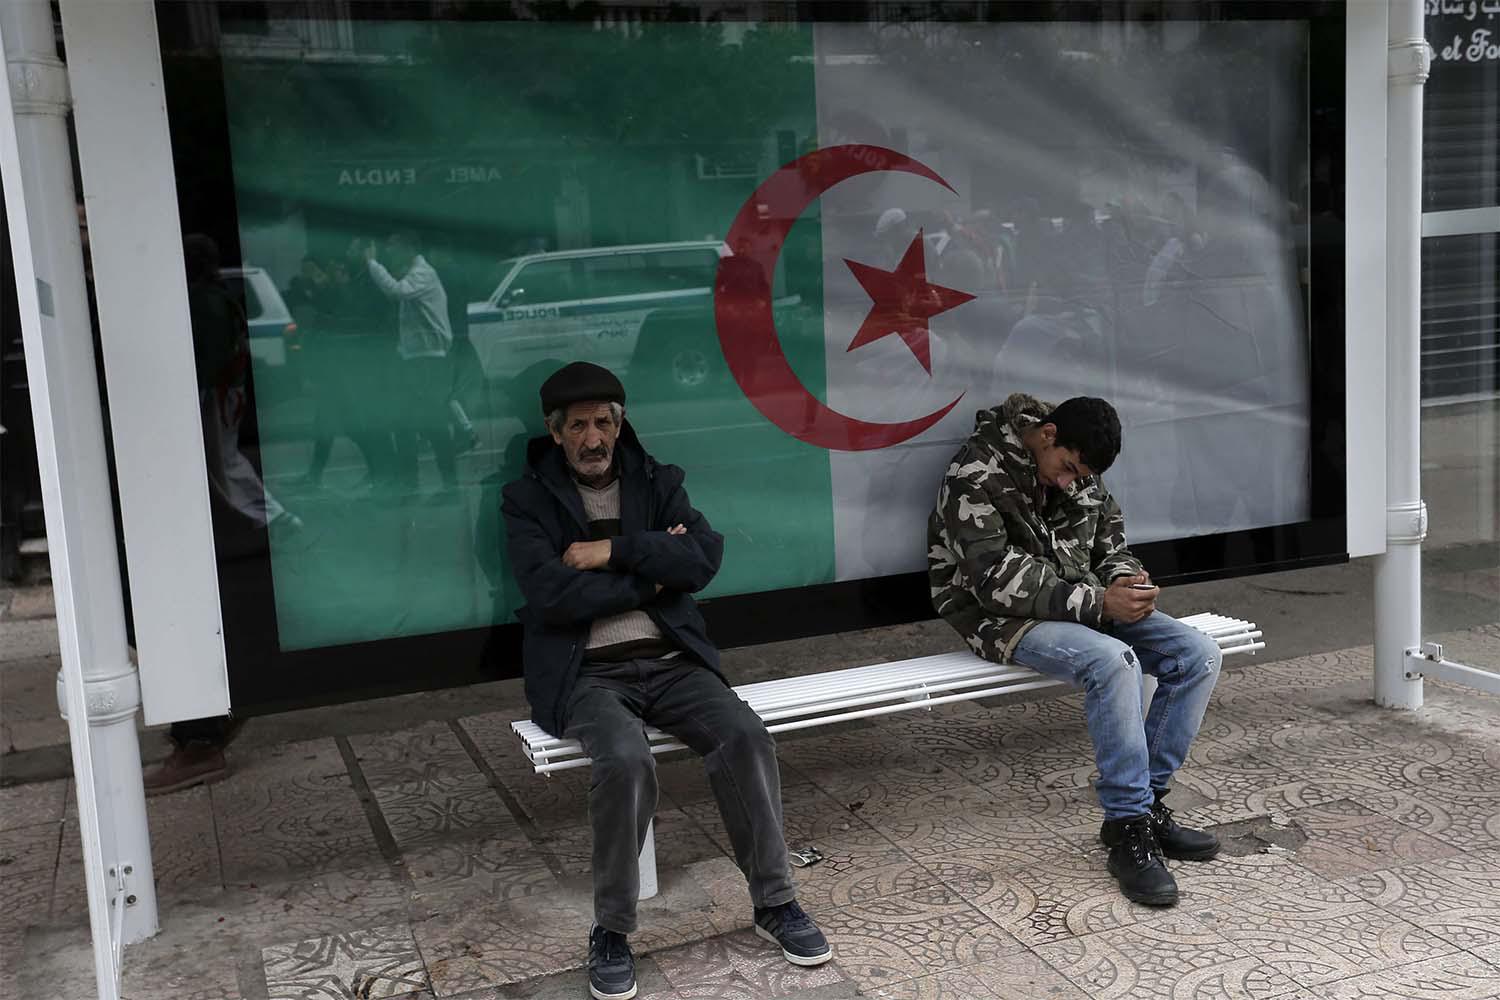 A sharp drop in oil prices has impacted Algeria's economy